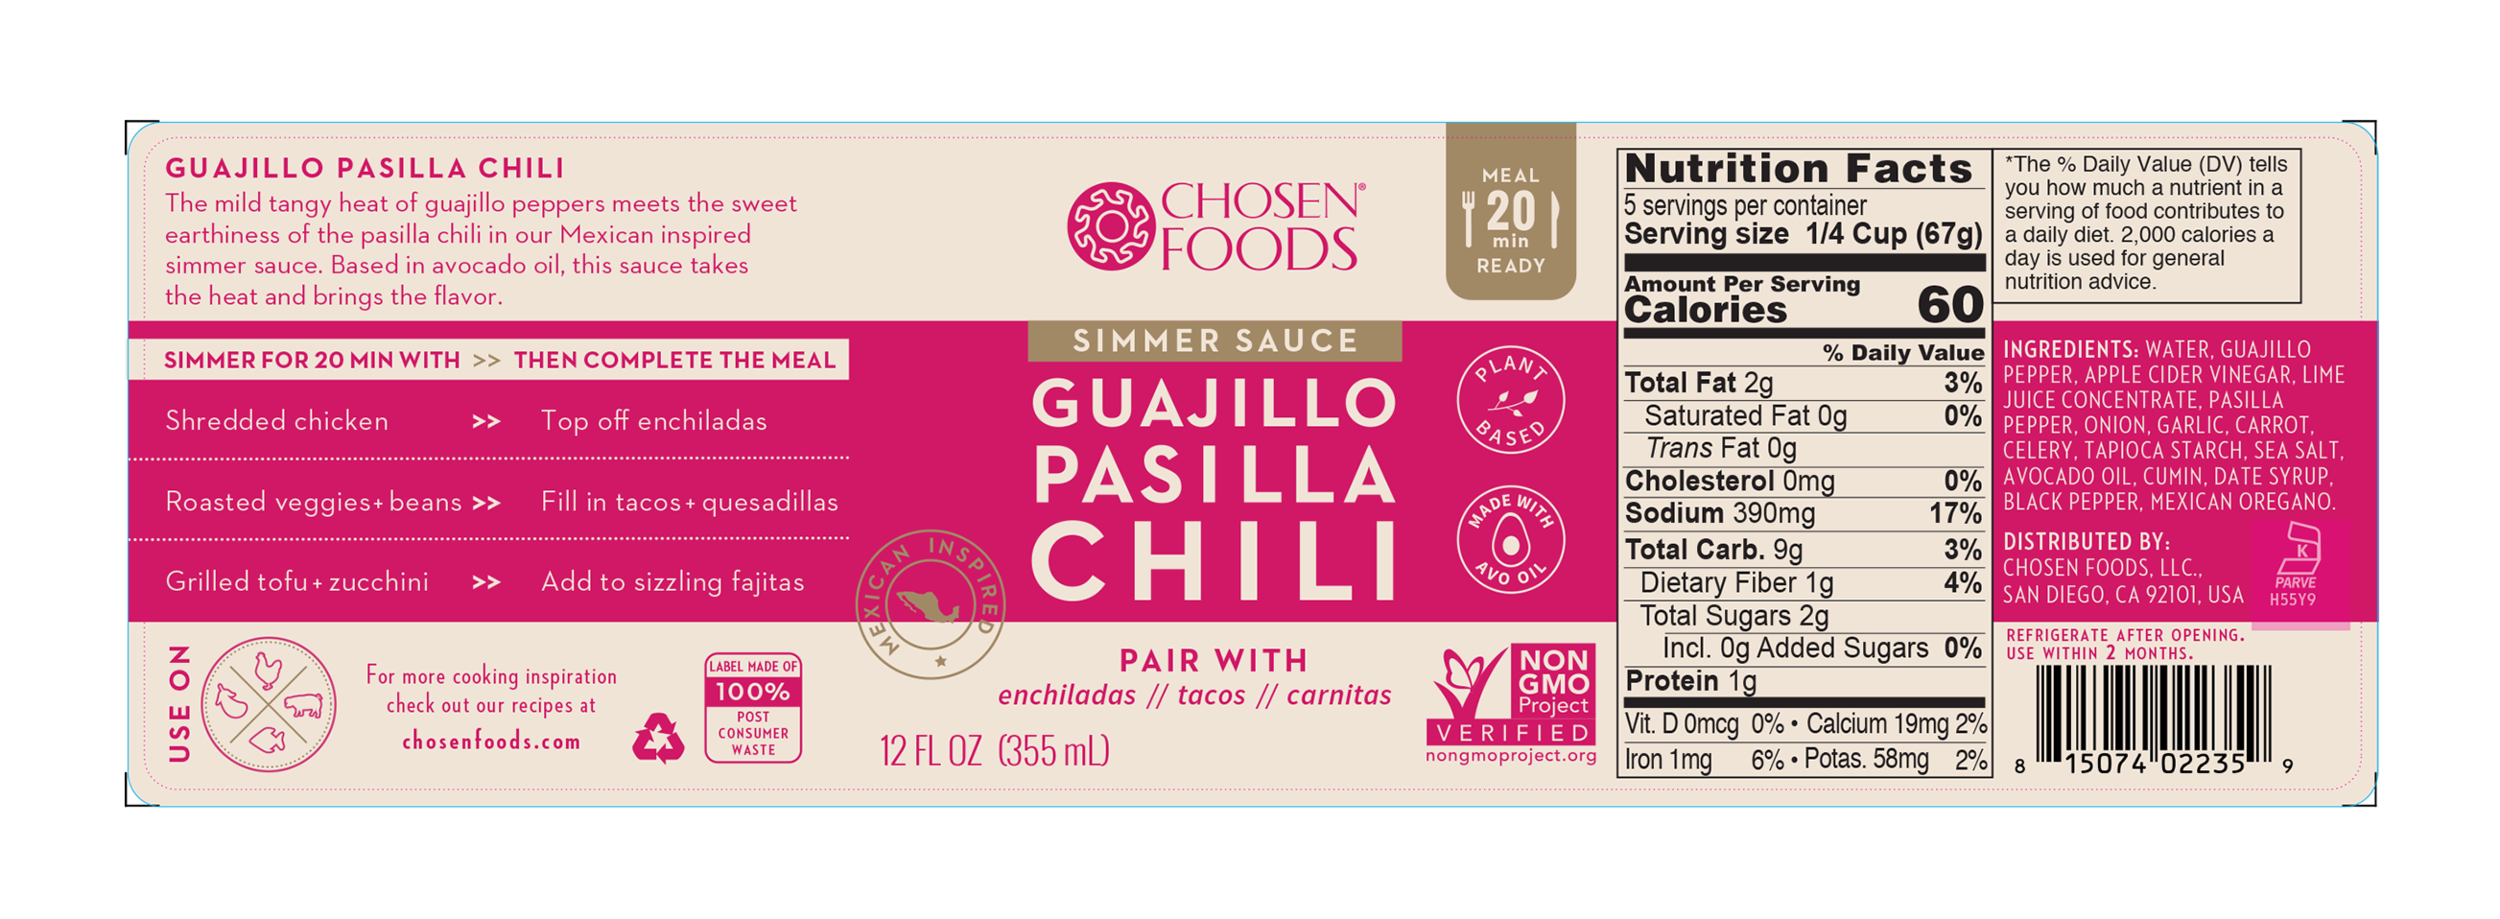 US_Simmer Sauce_Guajillo Pasilla Chili_12oz Labels.png